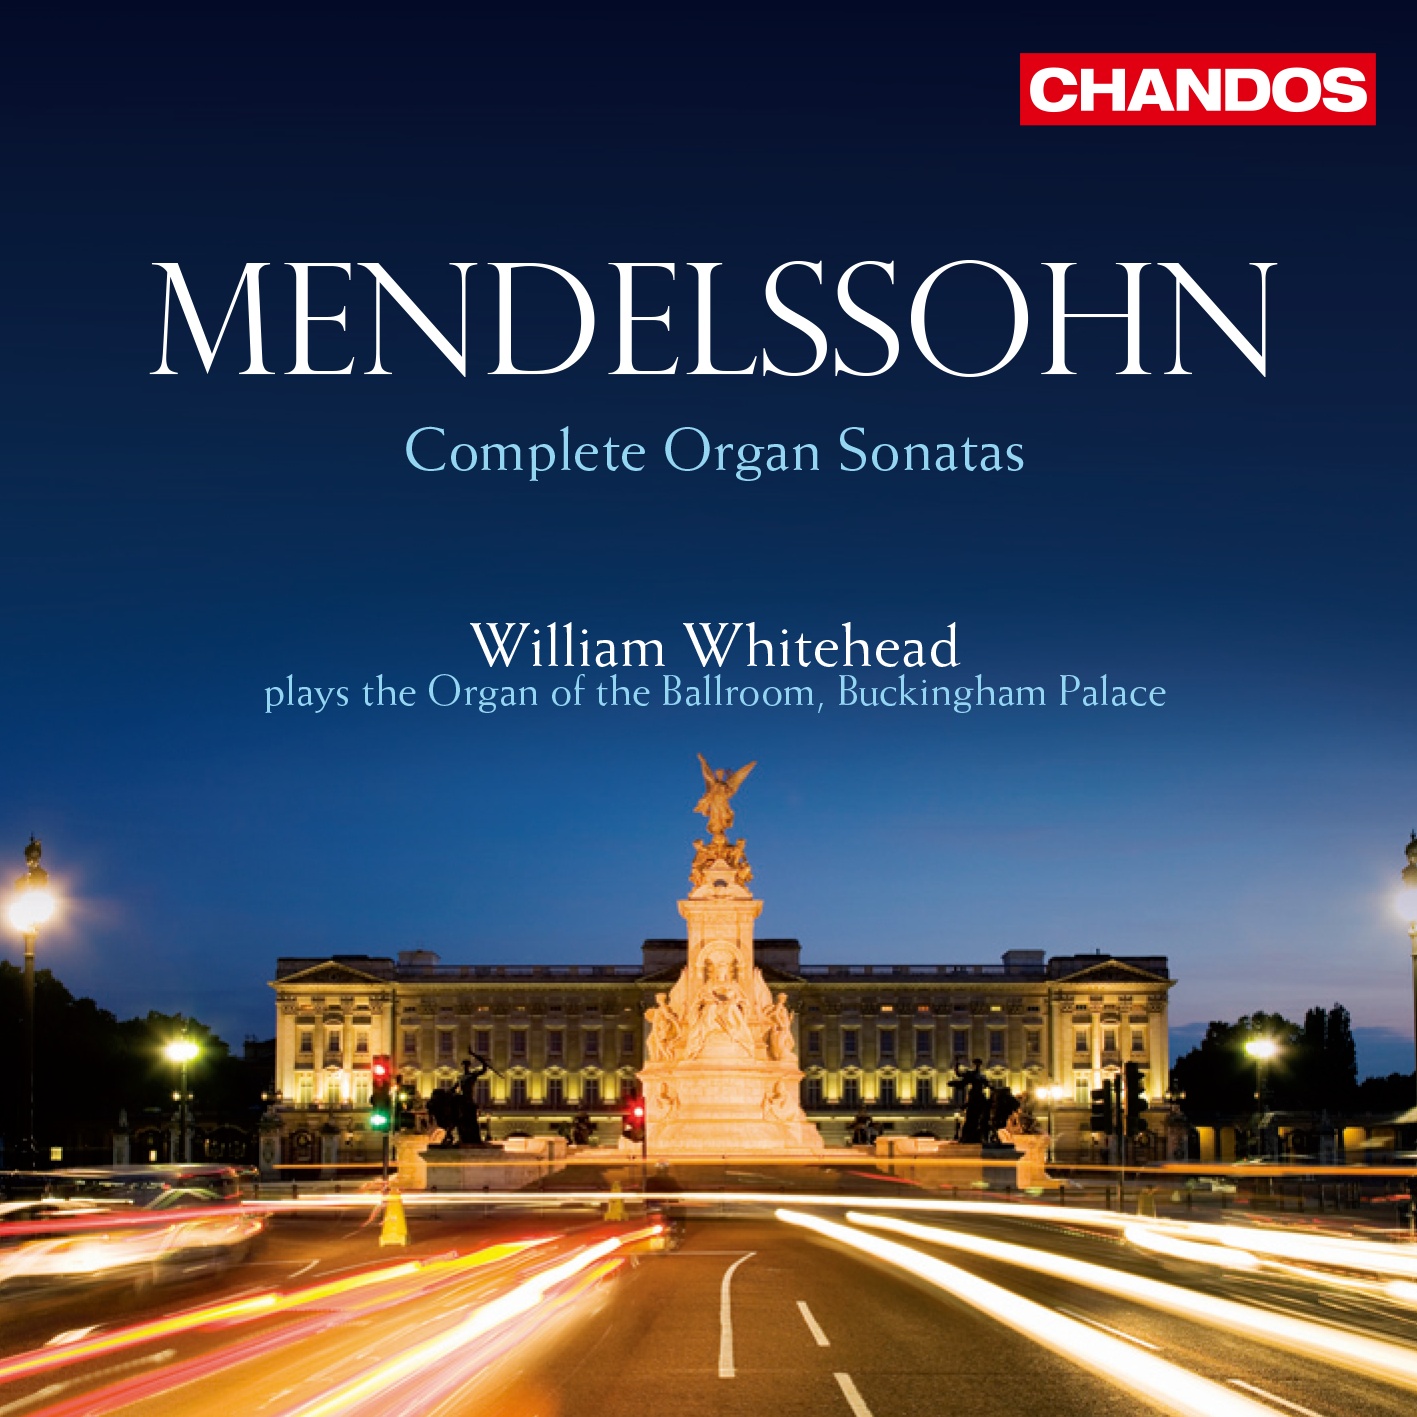 Felix Mendelssohn: Organ Sonata No. 1 in F minor/F major, Op. 65/1 - 1. Allegro moderato e serioso